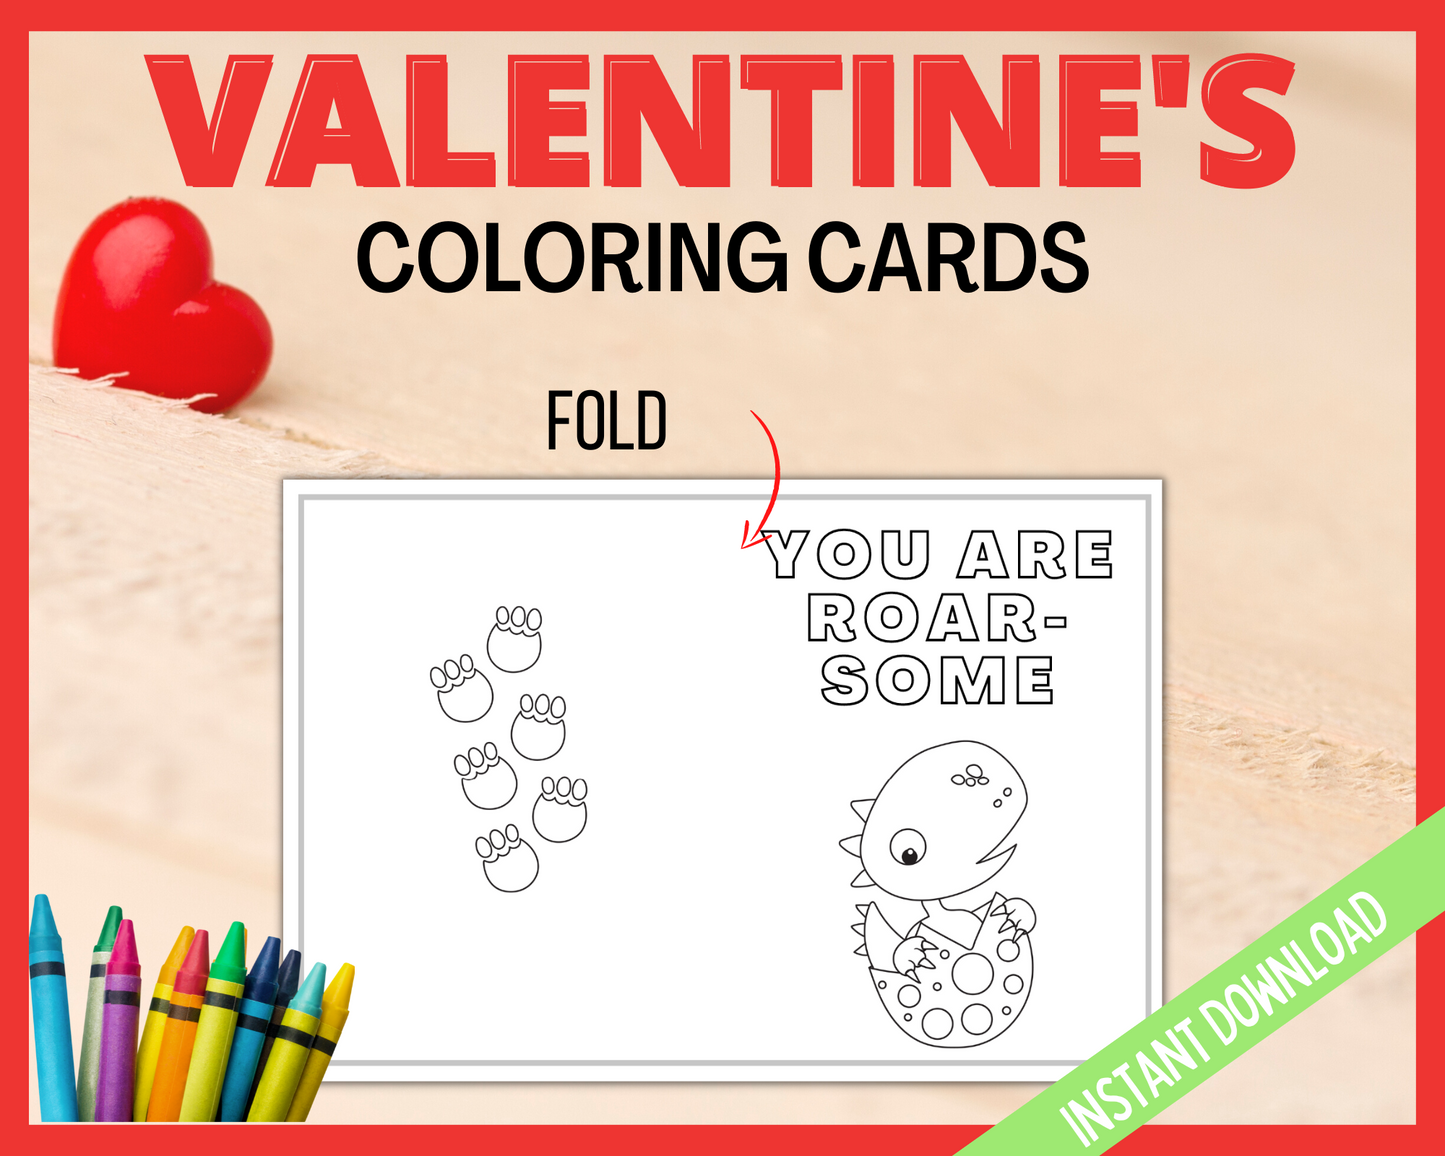 Dinosaur valentines printable coloring cards